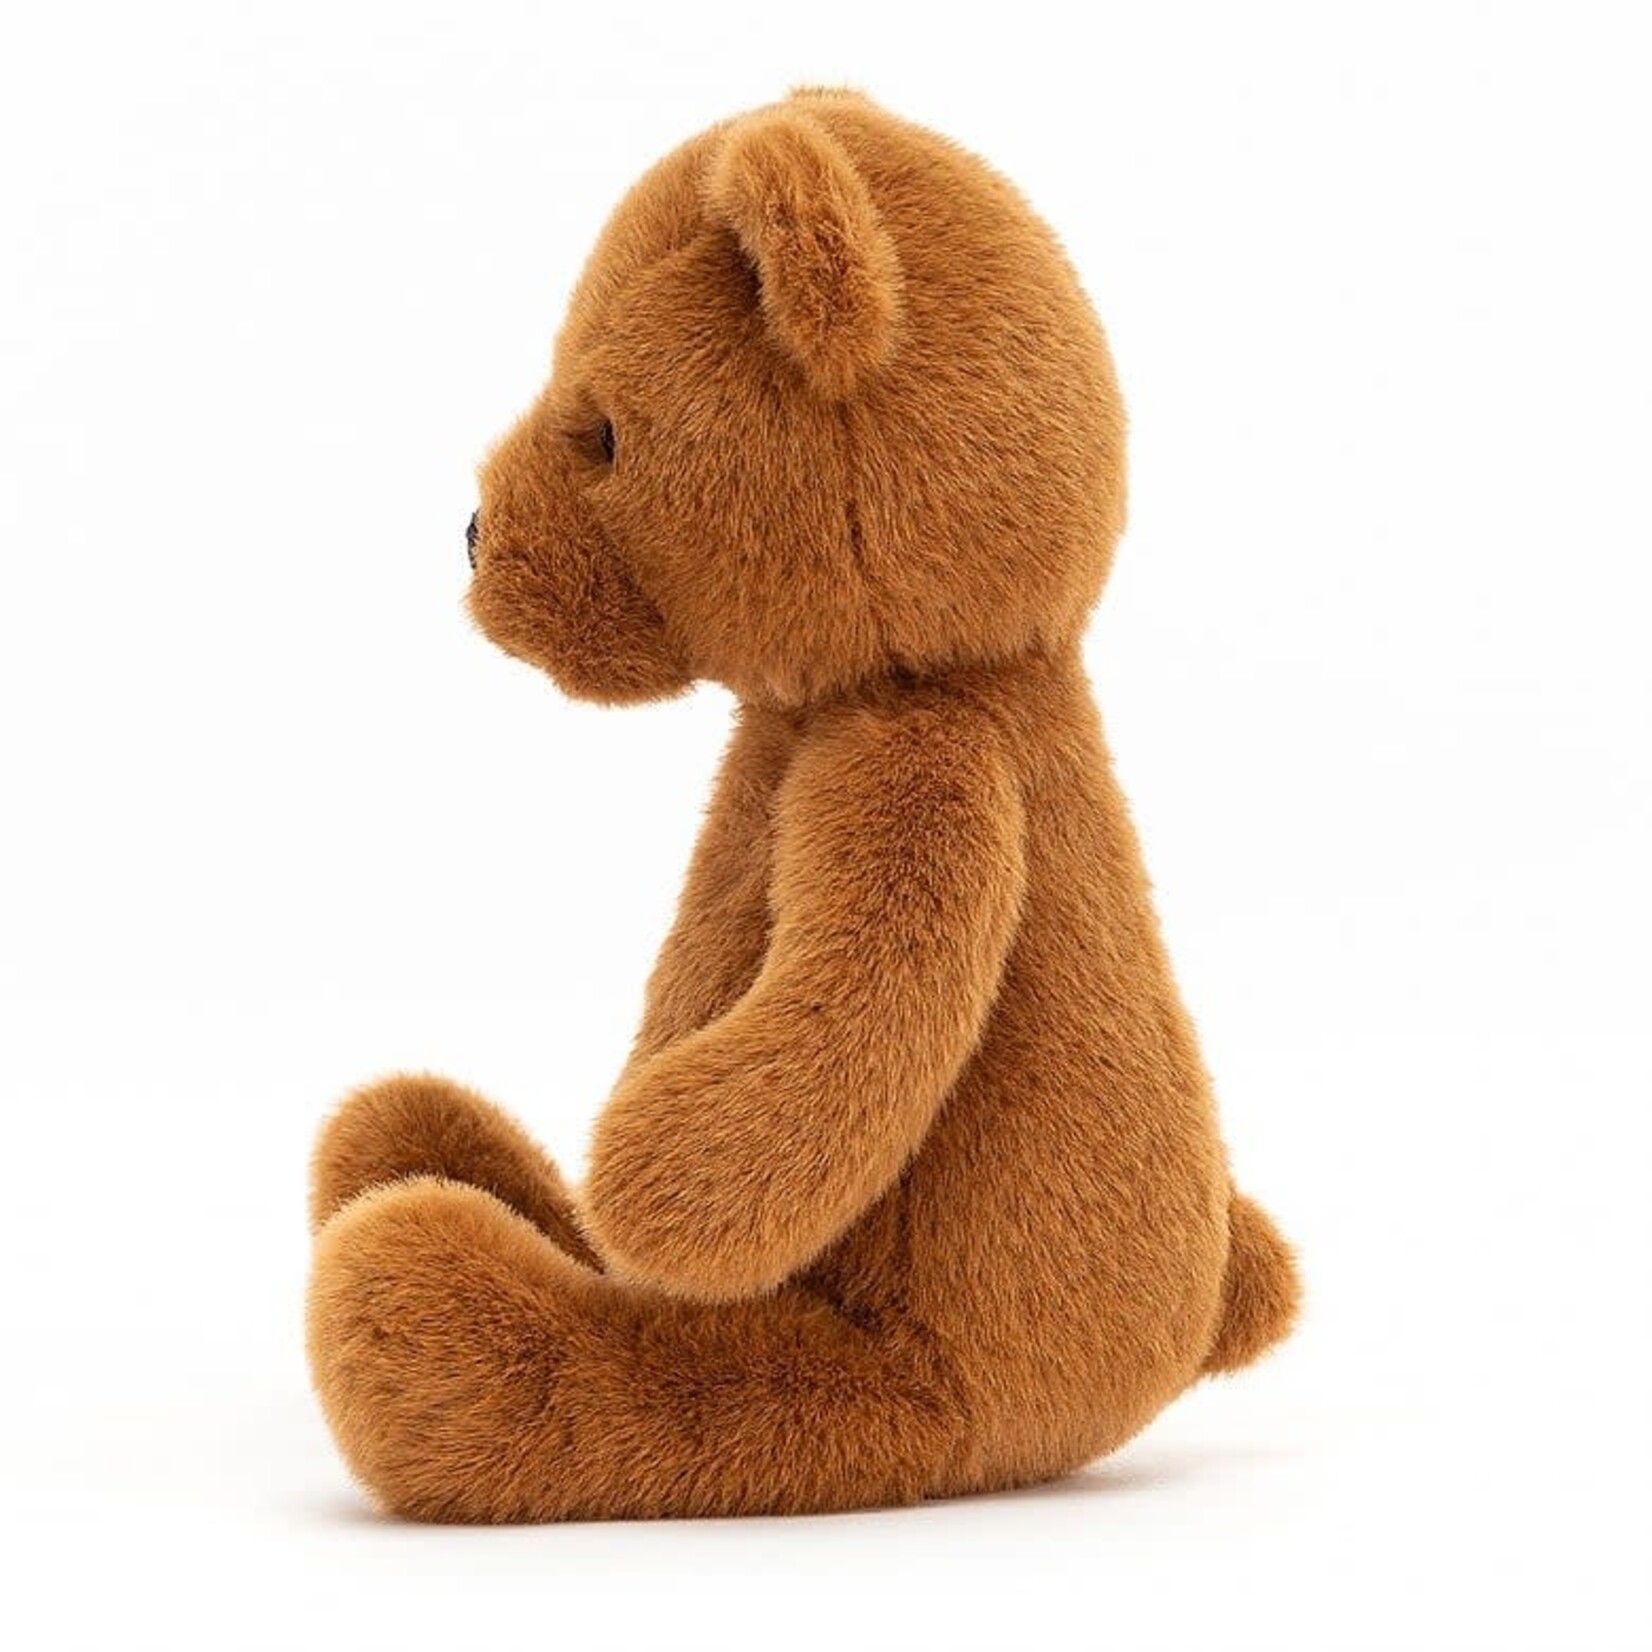 Jellycat JELLYCAT - Brown bear soft toy 'Maple Bear'